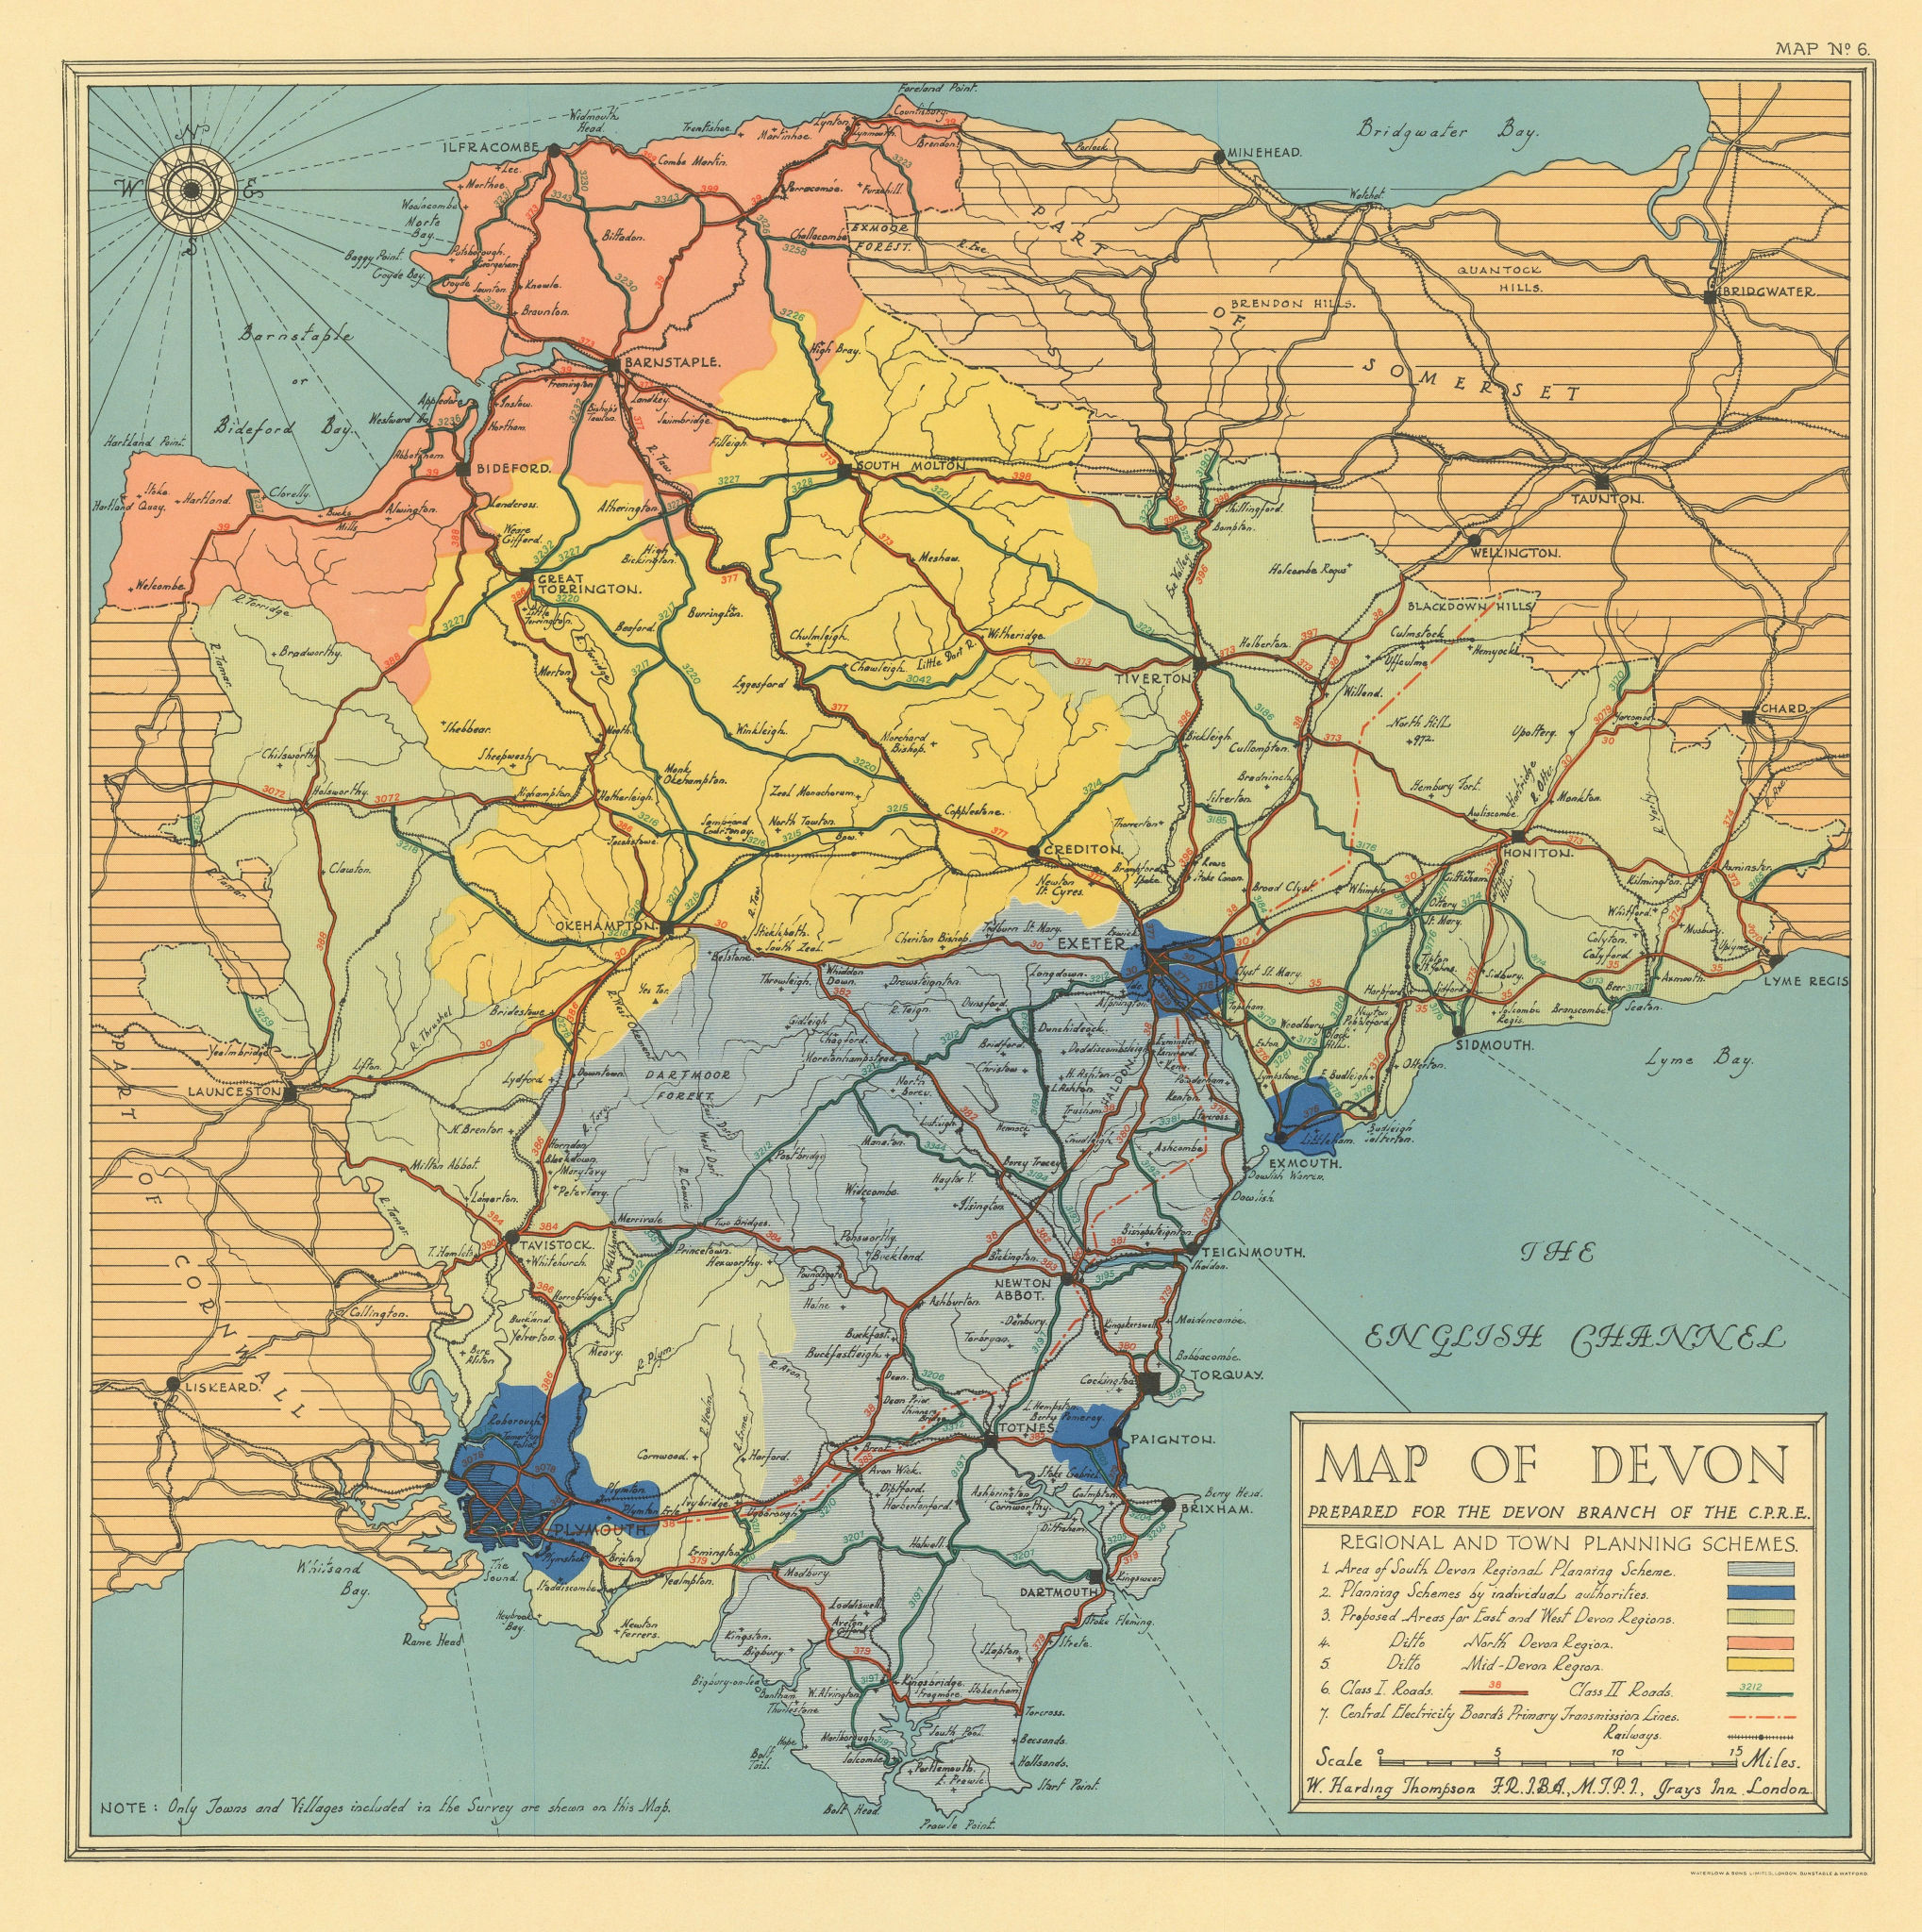 Devon regional & town planning schemes for CPRE by W. Harding Thompson 1932 map